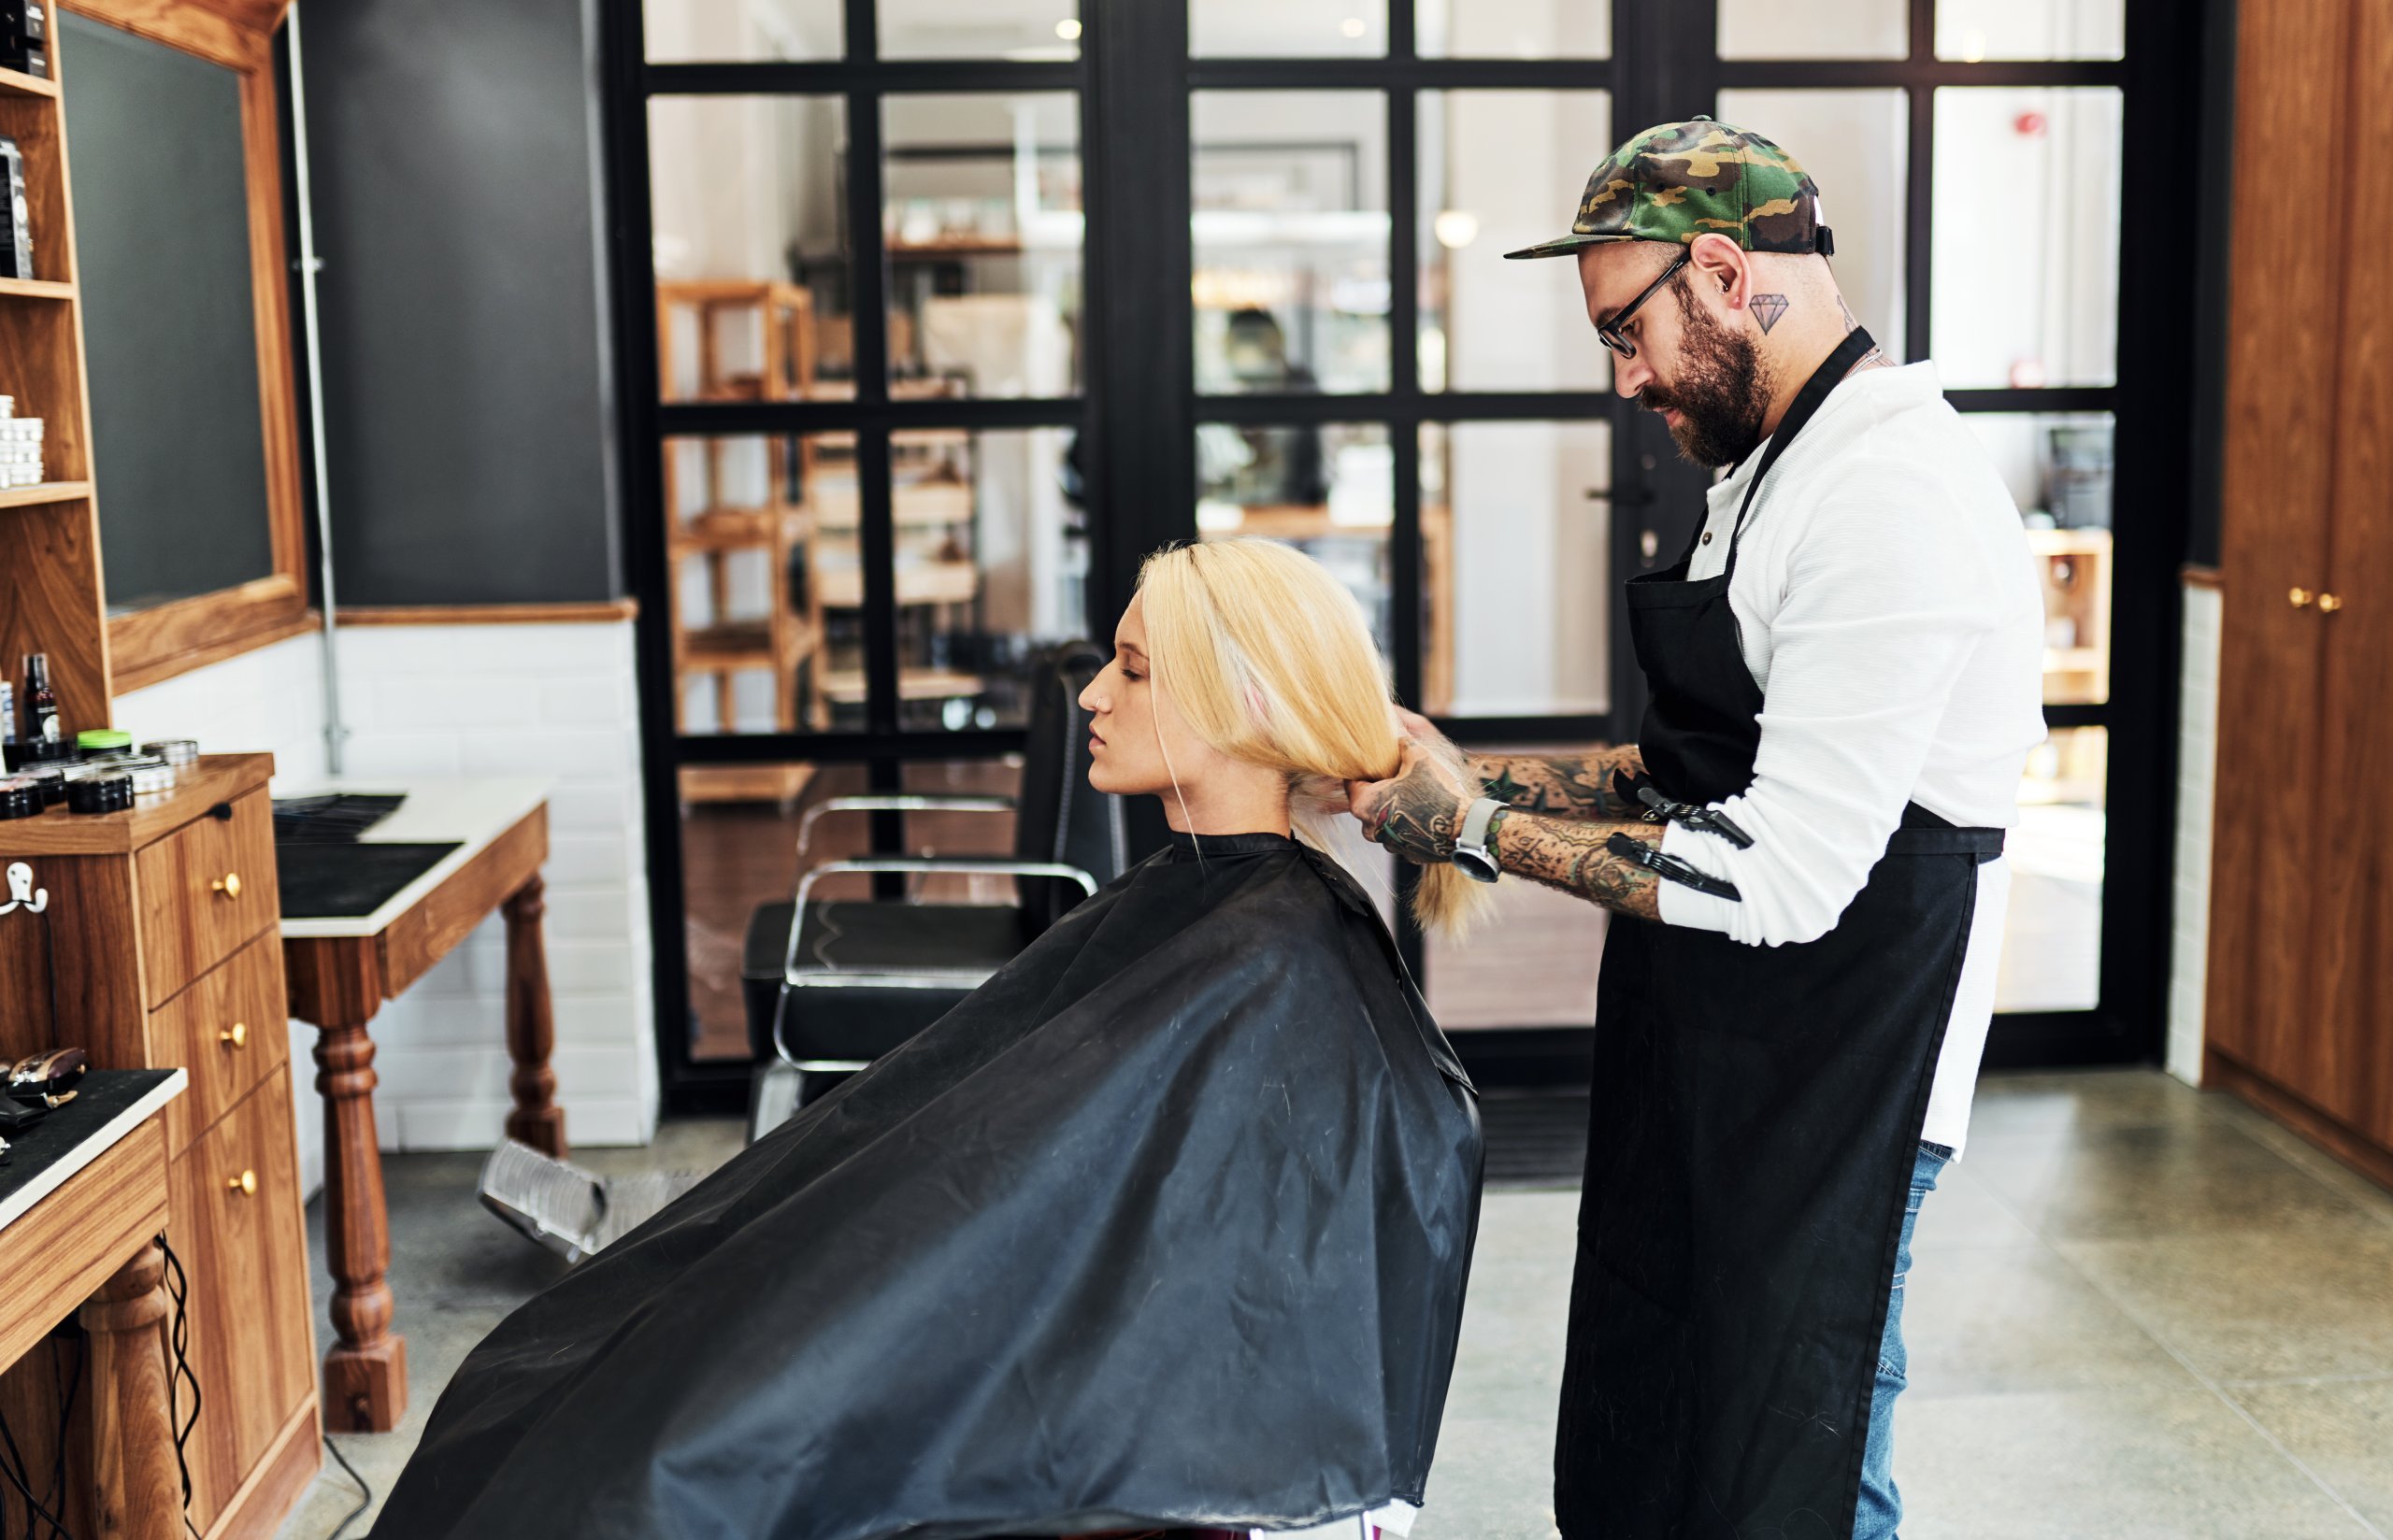 Salon business owner cutting hair